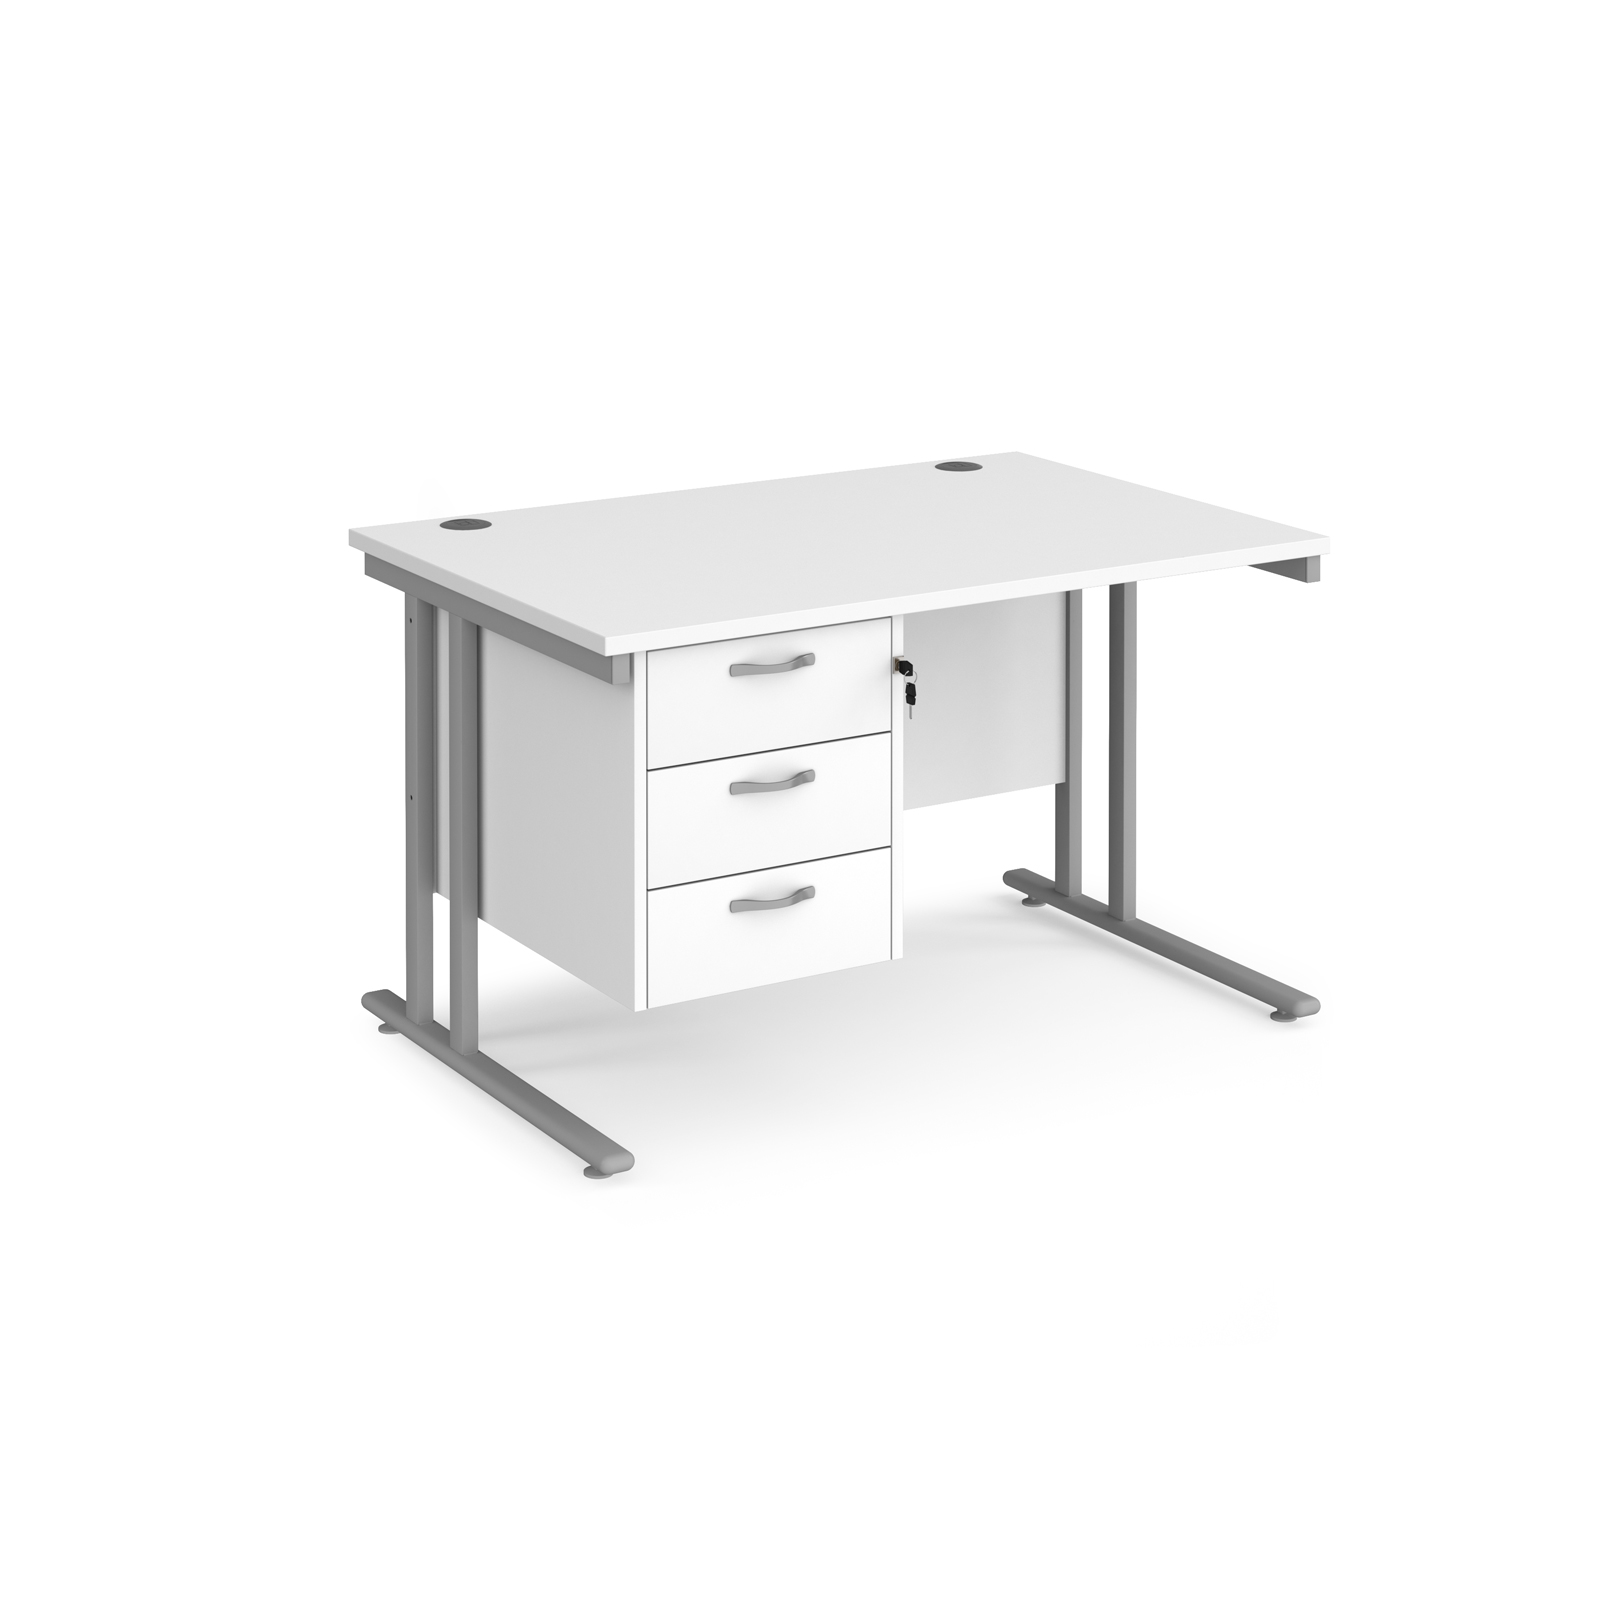 Rectangular Desks Maestro 25 straight desk 1200mm x 800mm with 3 drawer pedestal - silver cantilever leg frame, white top